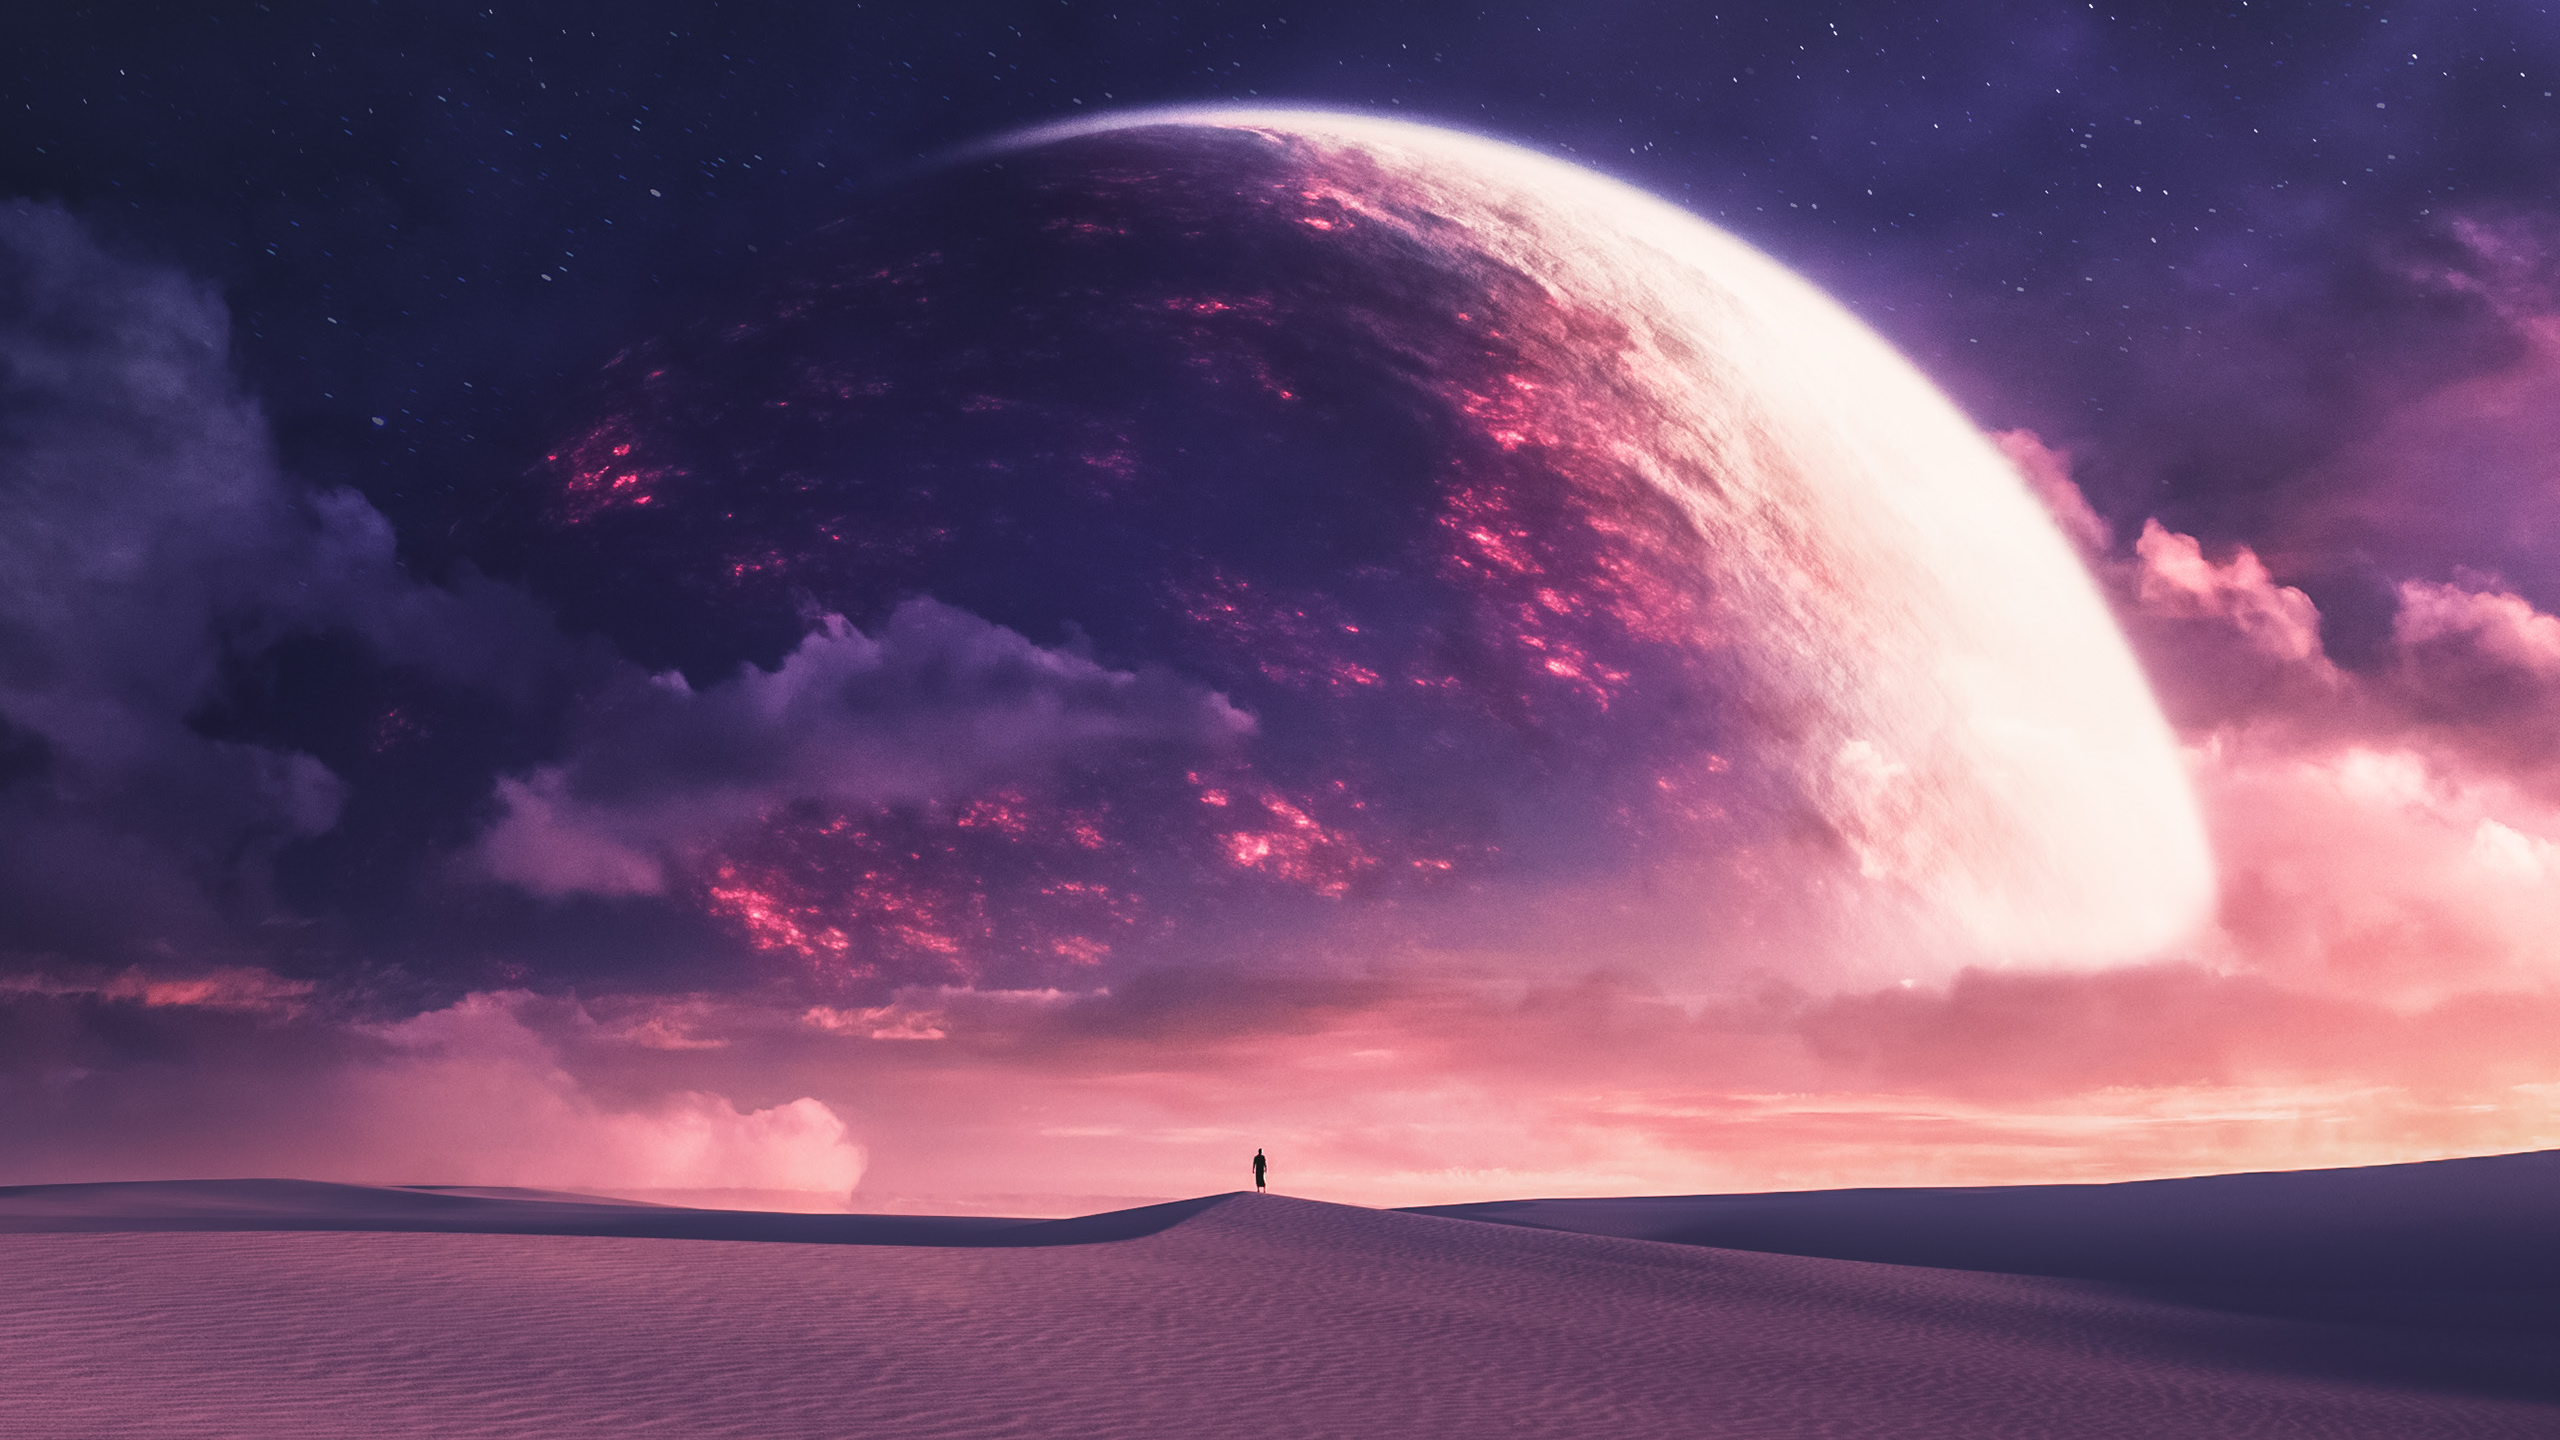 Digital Art Digital Artwork Desert Dunes Clouds Sky Planet Landscape Stars 2560x1440